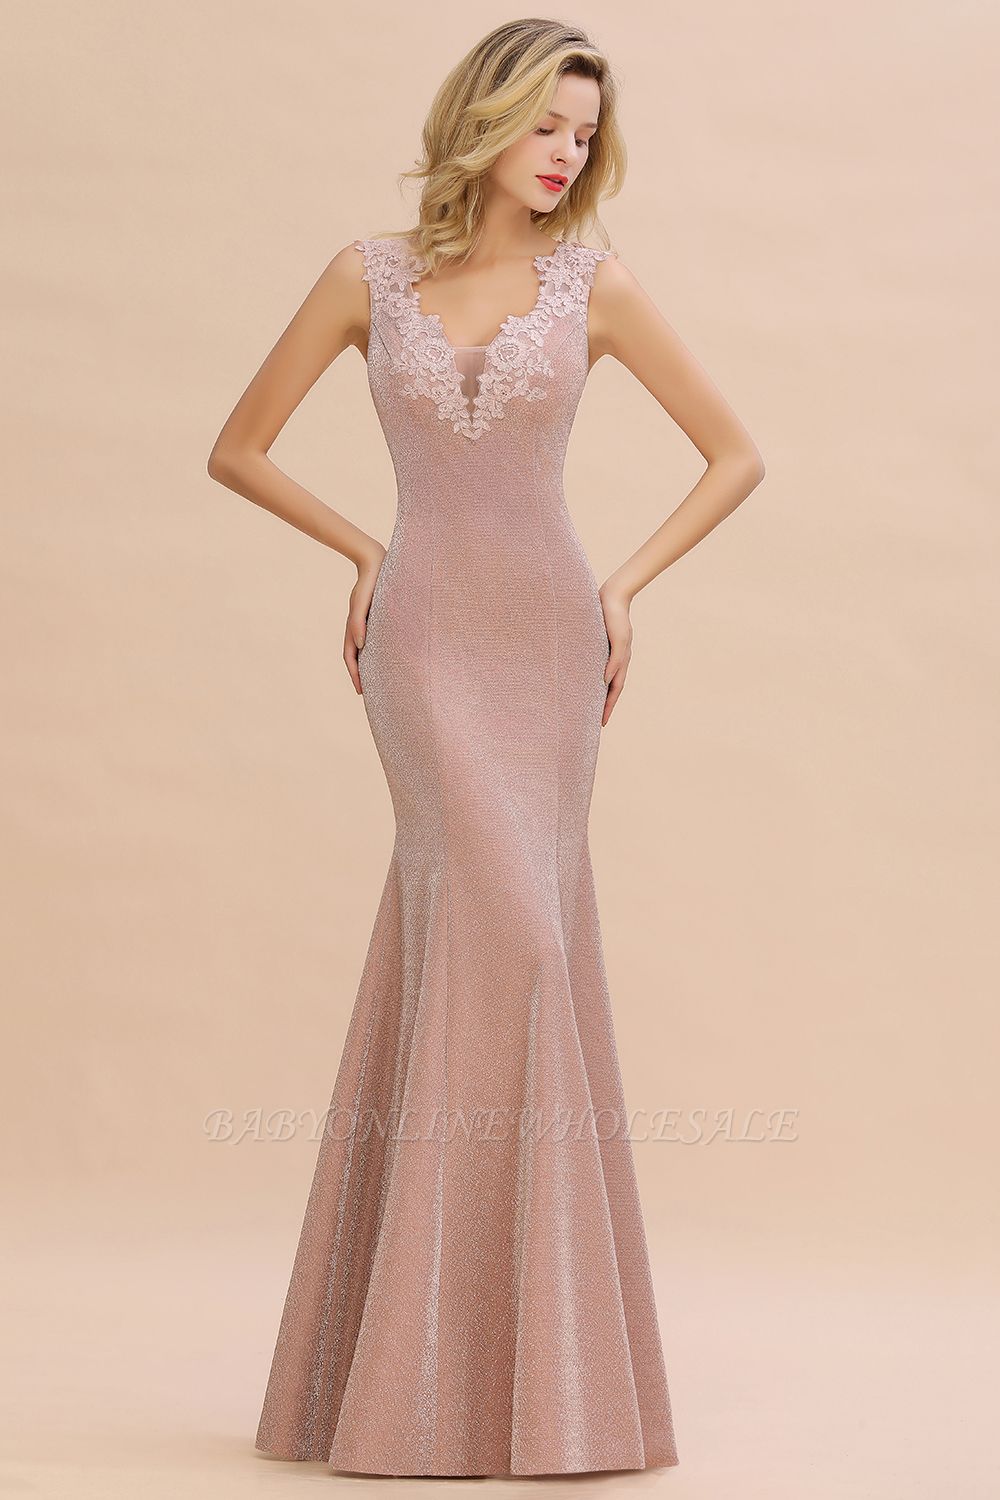 Sparkly Deep V-neck Long Evening Dresses | Elegant Flowers Neck Sleeveless Pink Floor-length Formal Dress